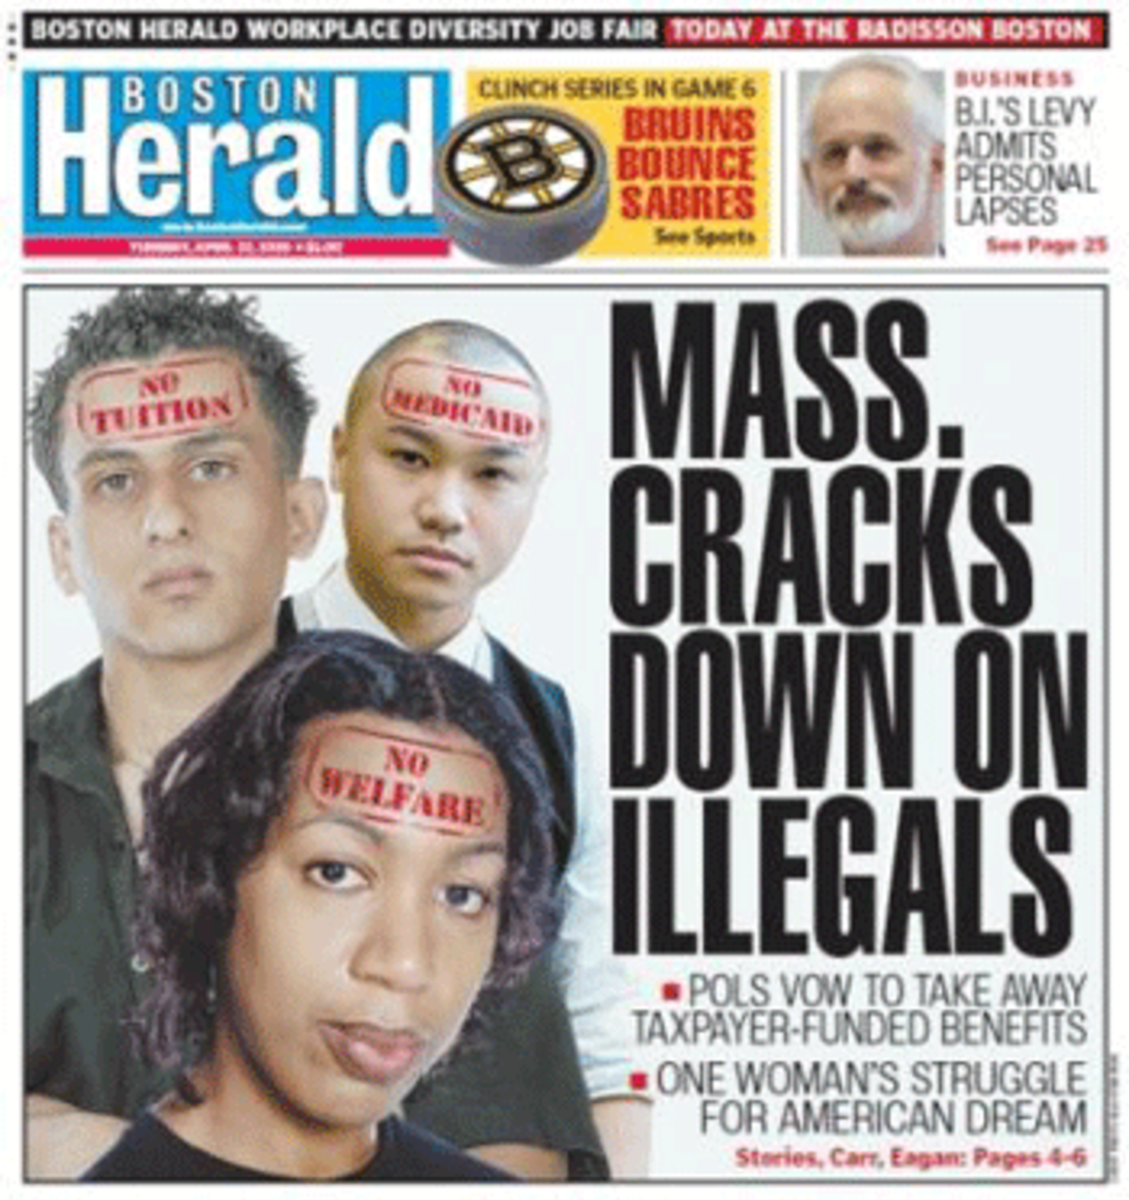 boston herald mass. cracks down on illegals